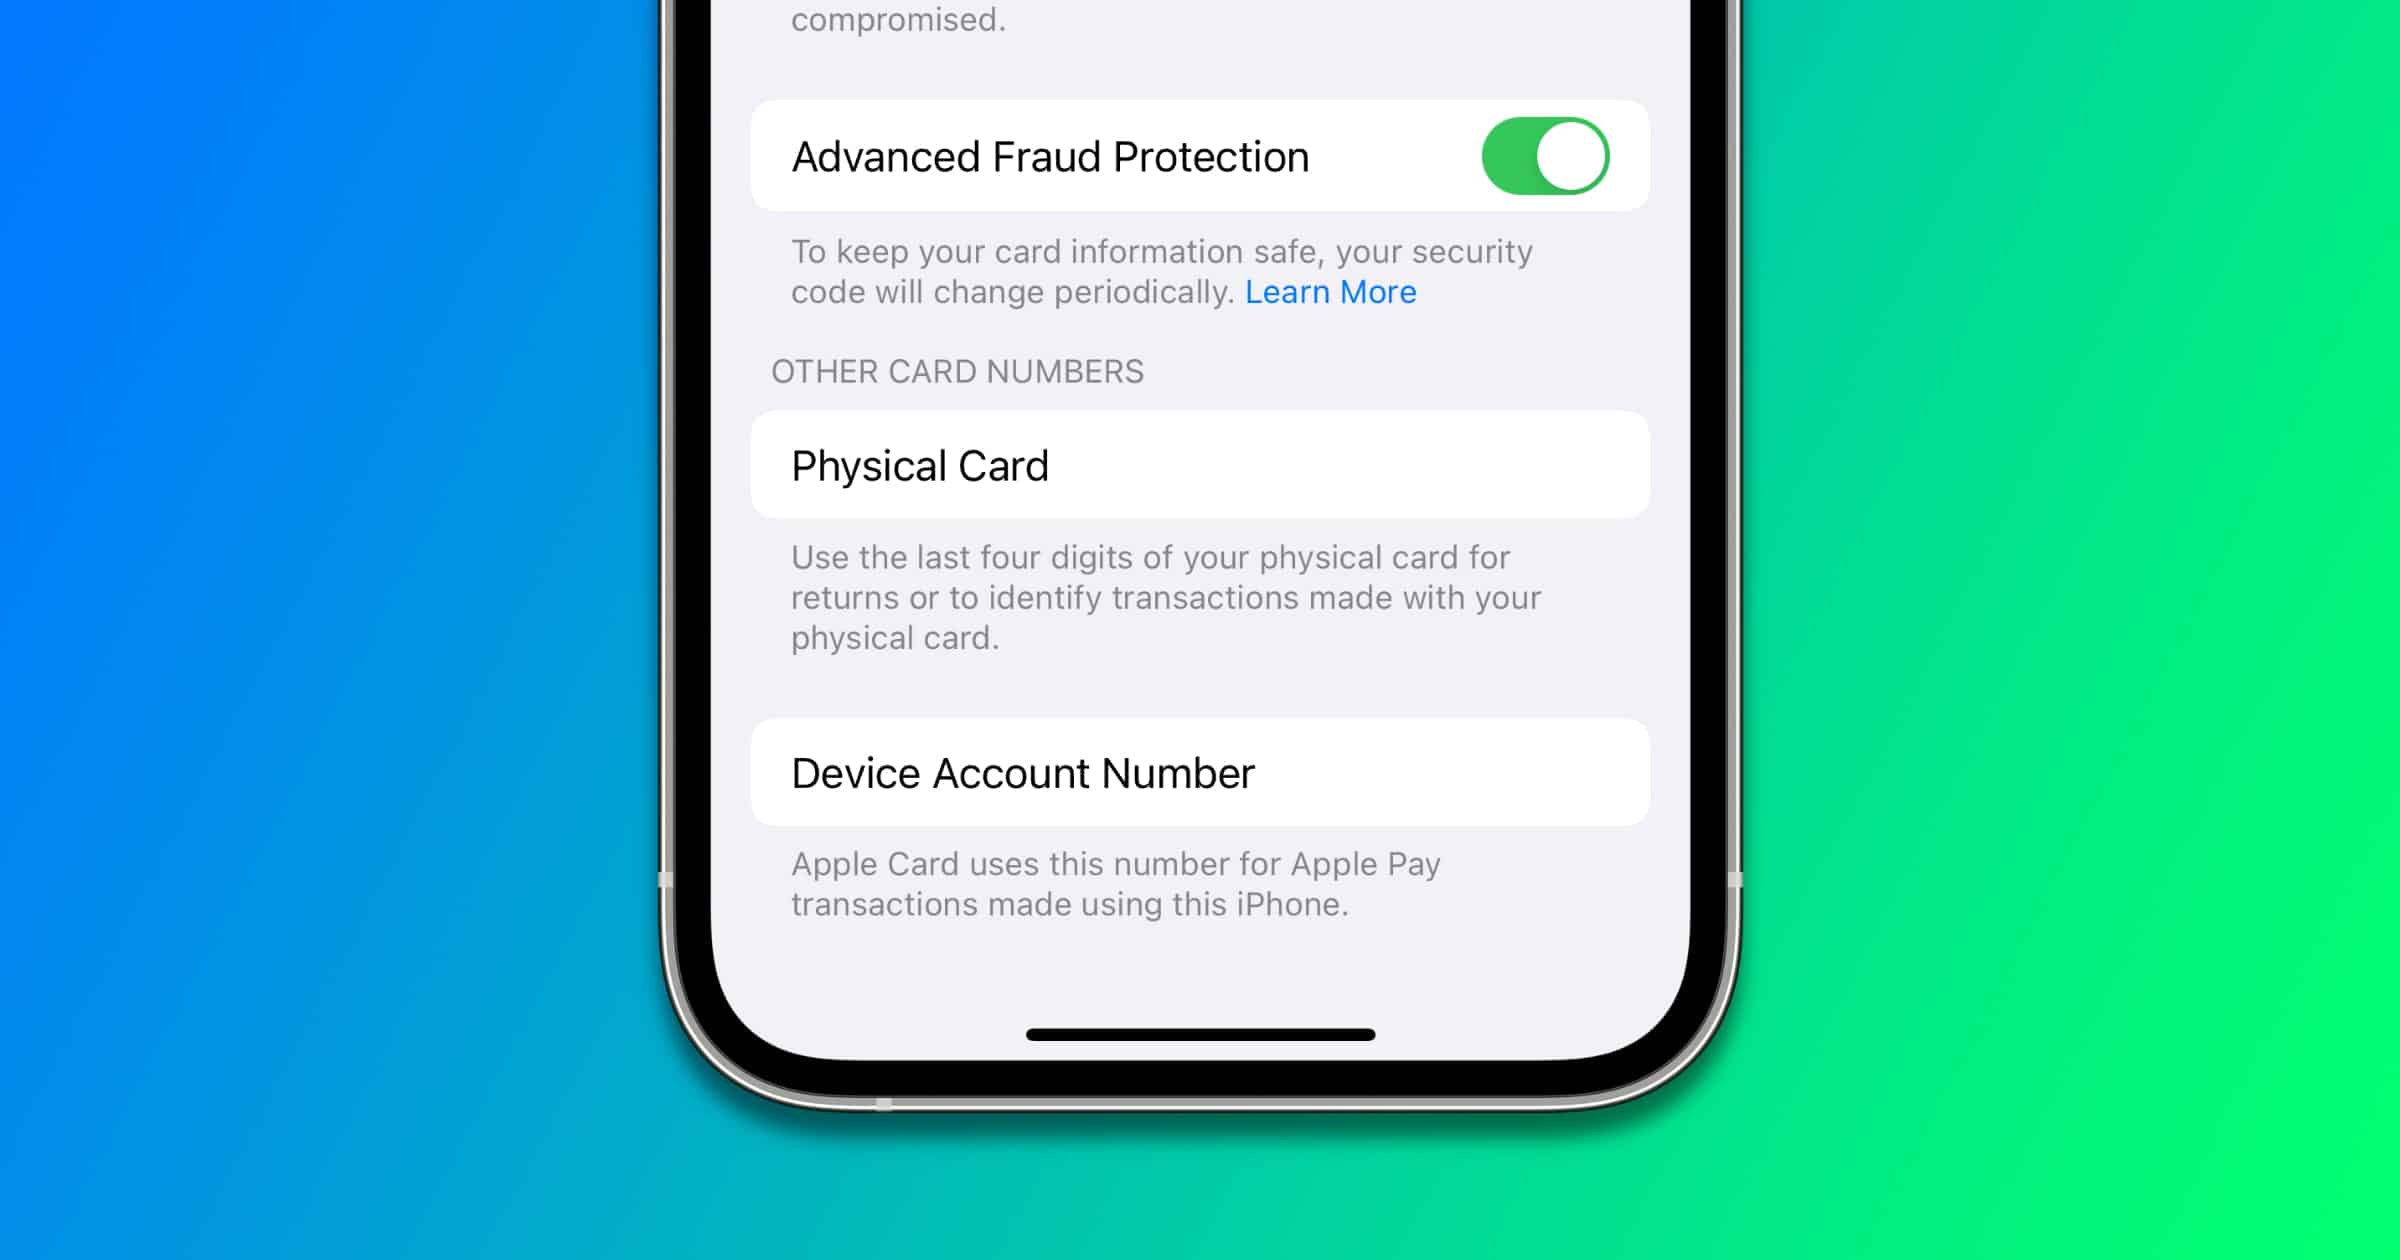 apple card advanced fraud protection